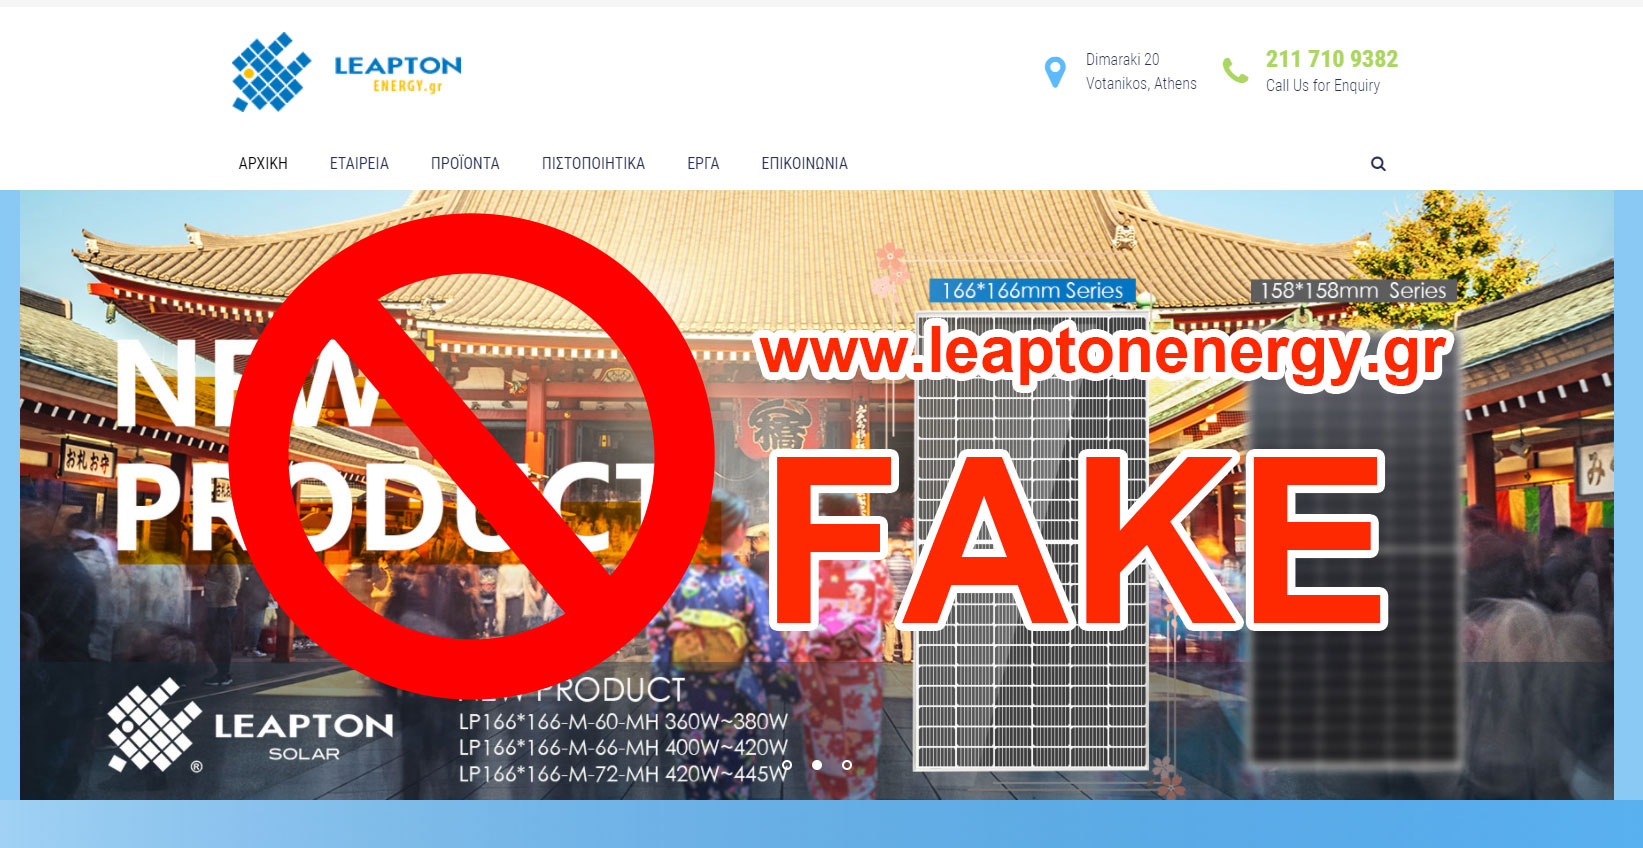 www.leaptonenergy.gr is a Greek fake website imitating Leapton Energy. 